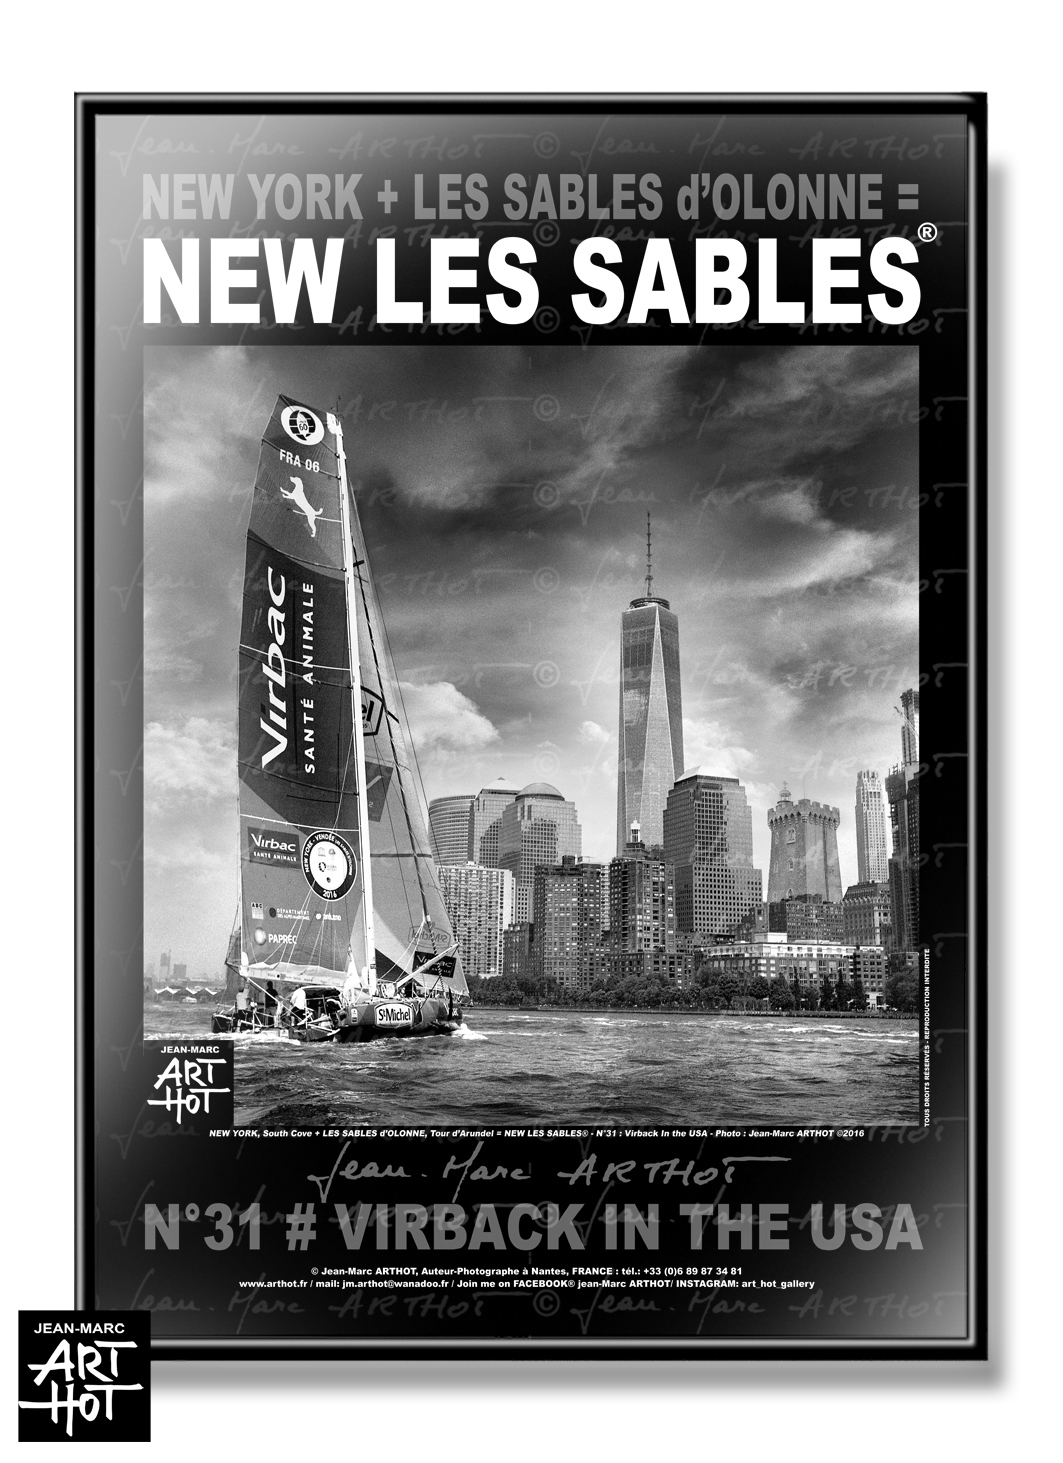 arthot-photo-art-b&w-new-york-vendee-sables-olonne-newlessables-031-voilier-virbac-AFFICHE